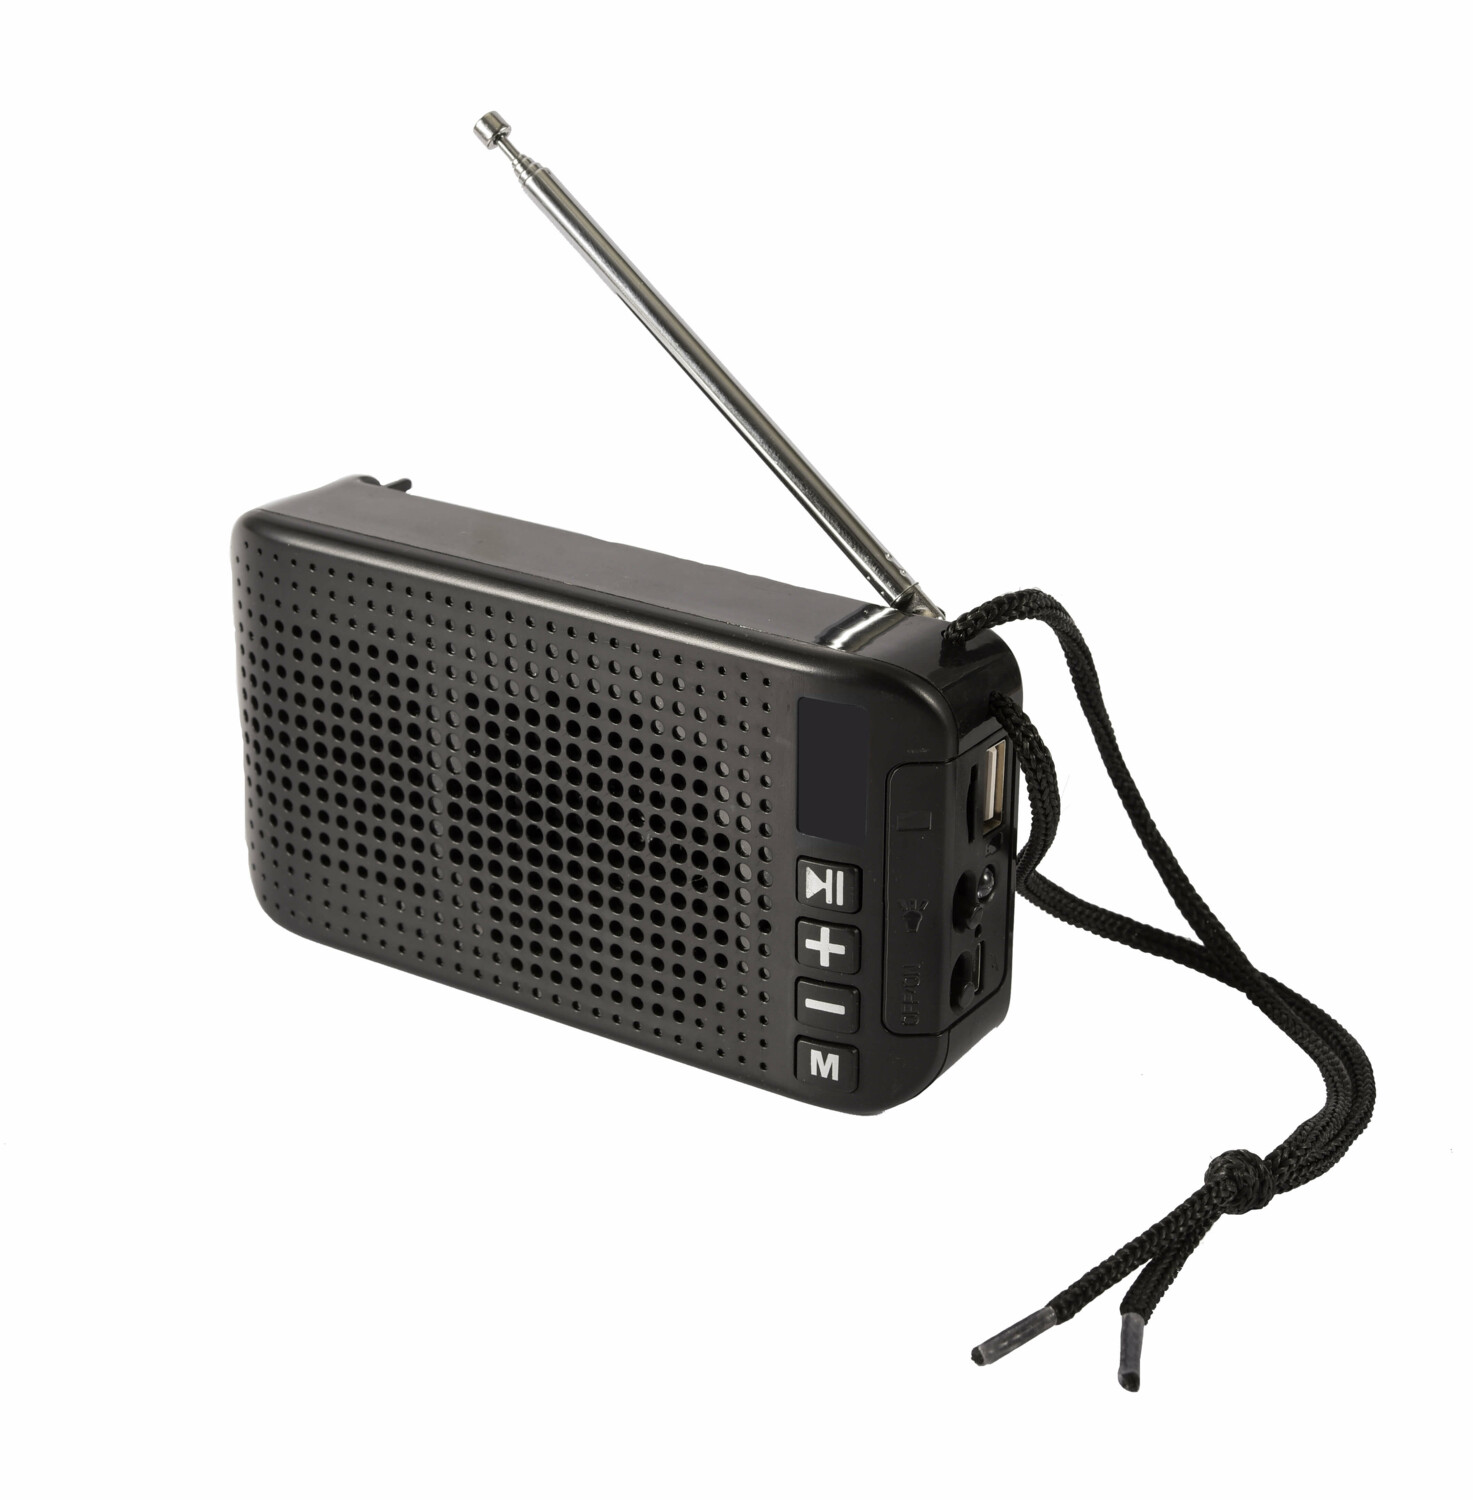 Enceinte Bluetooth SANS FIL 3 W multifoctions avec radio FM